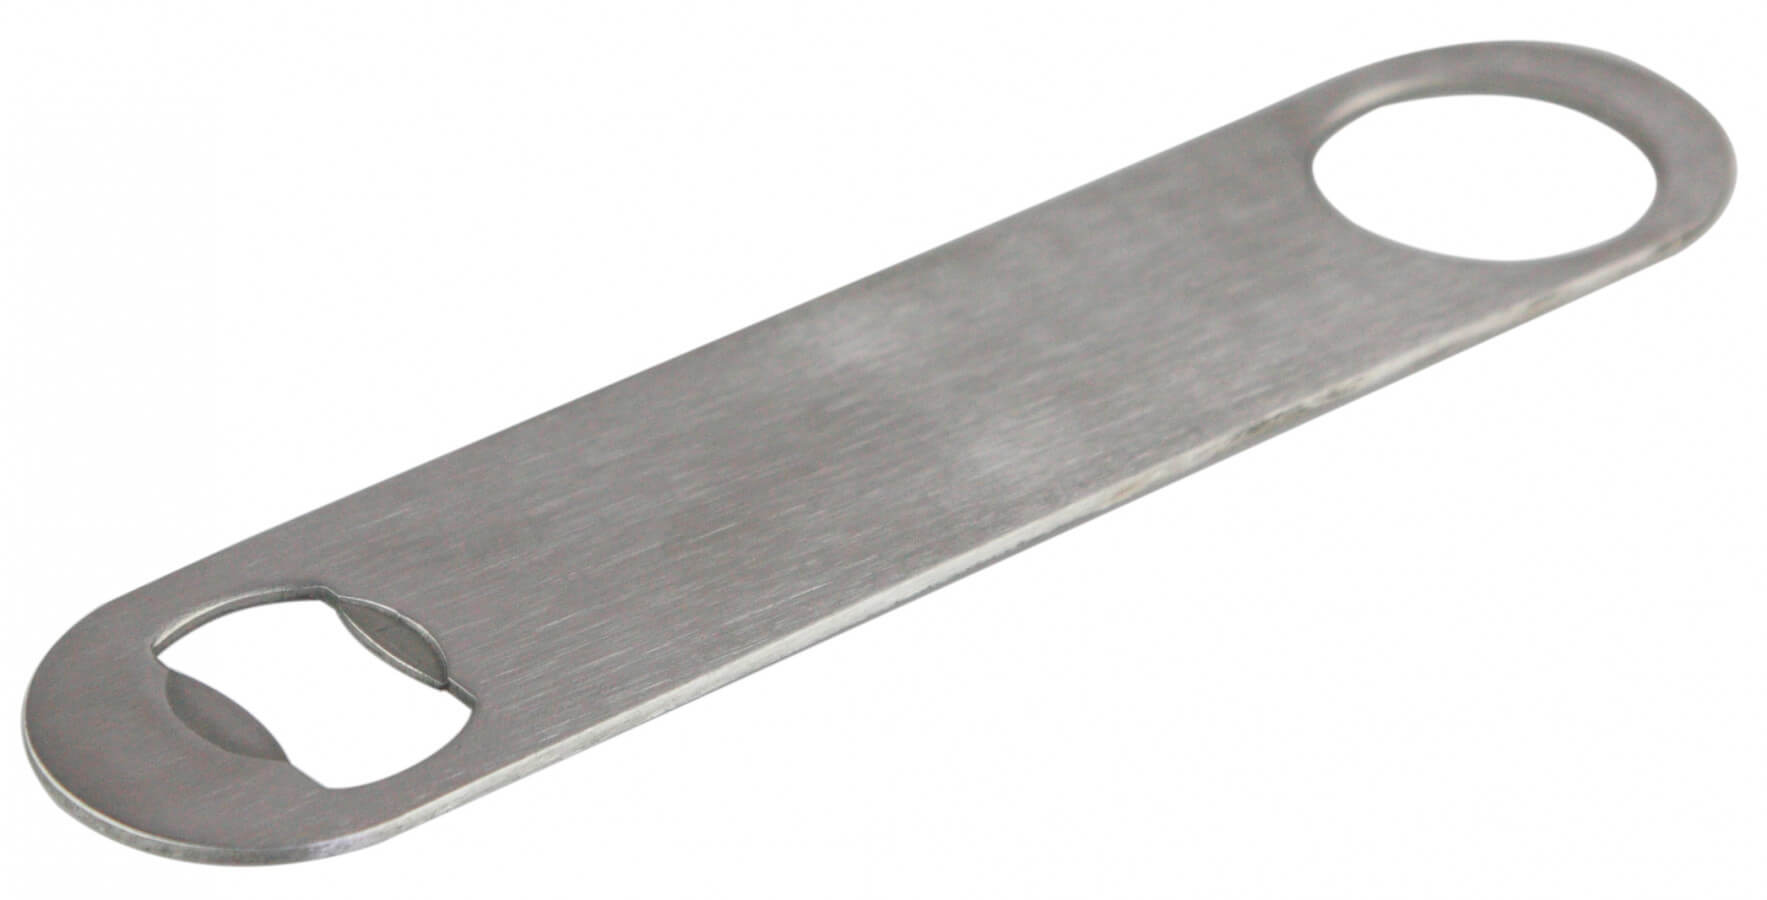 Speed opener/ Cap lifter - stainless steel